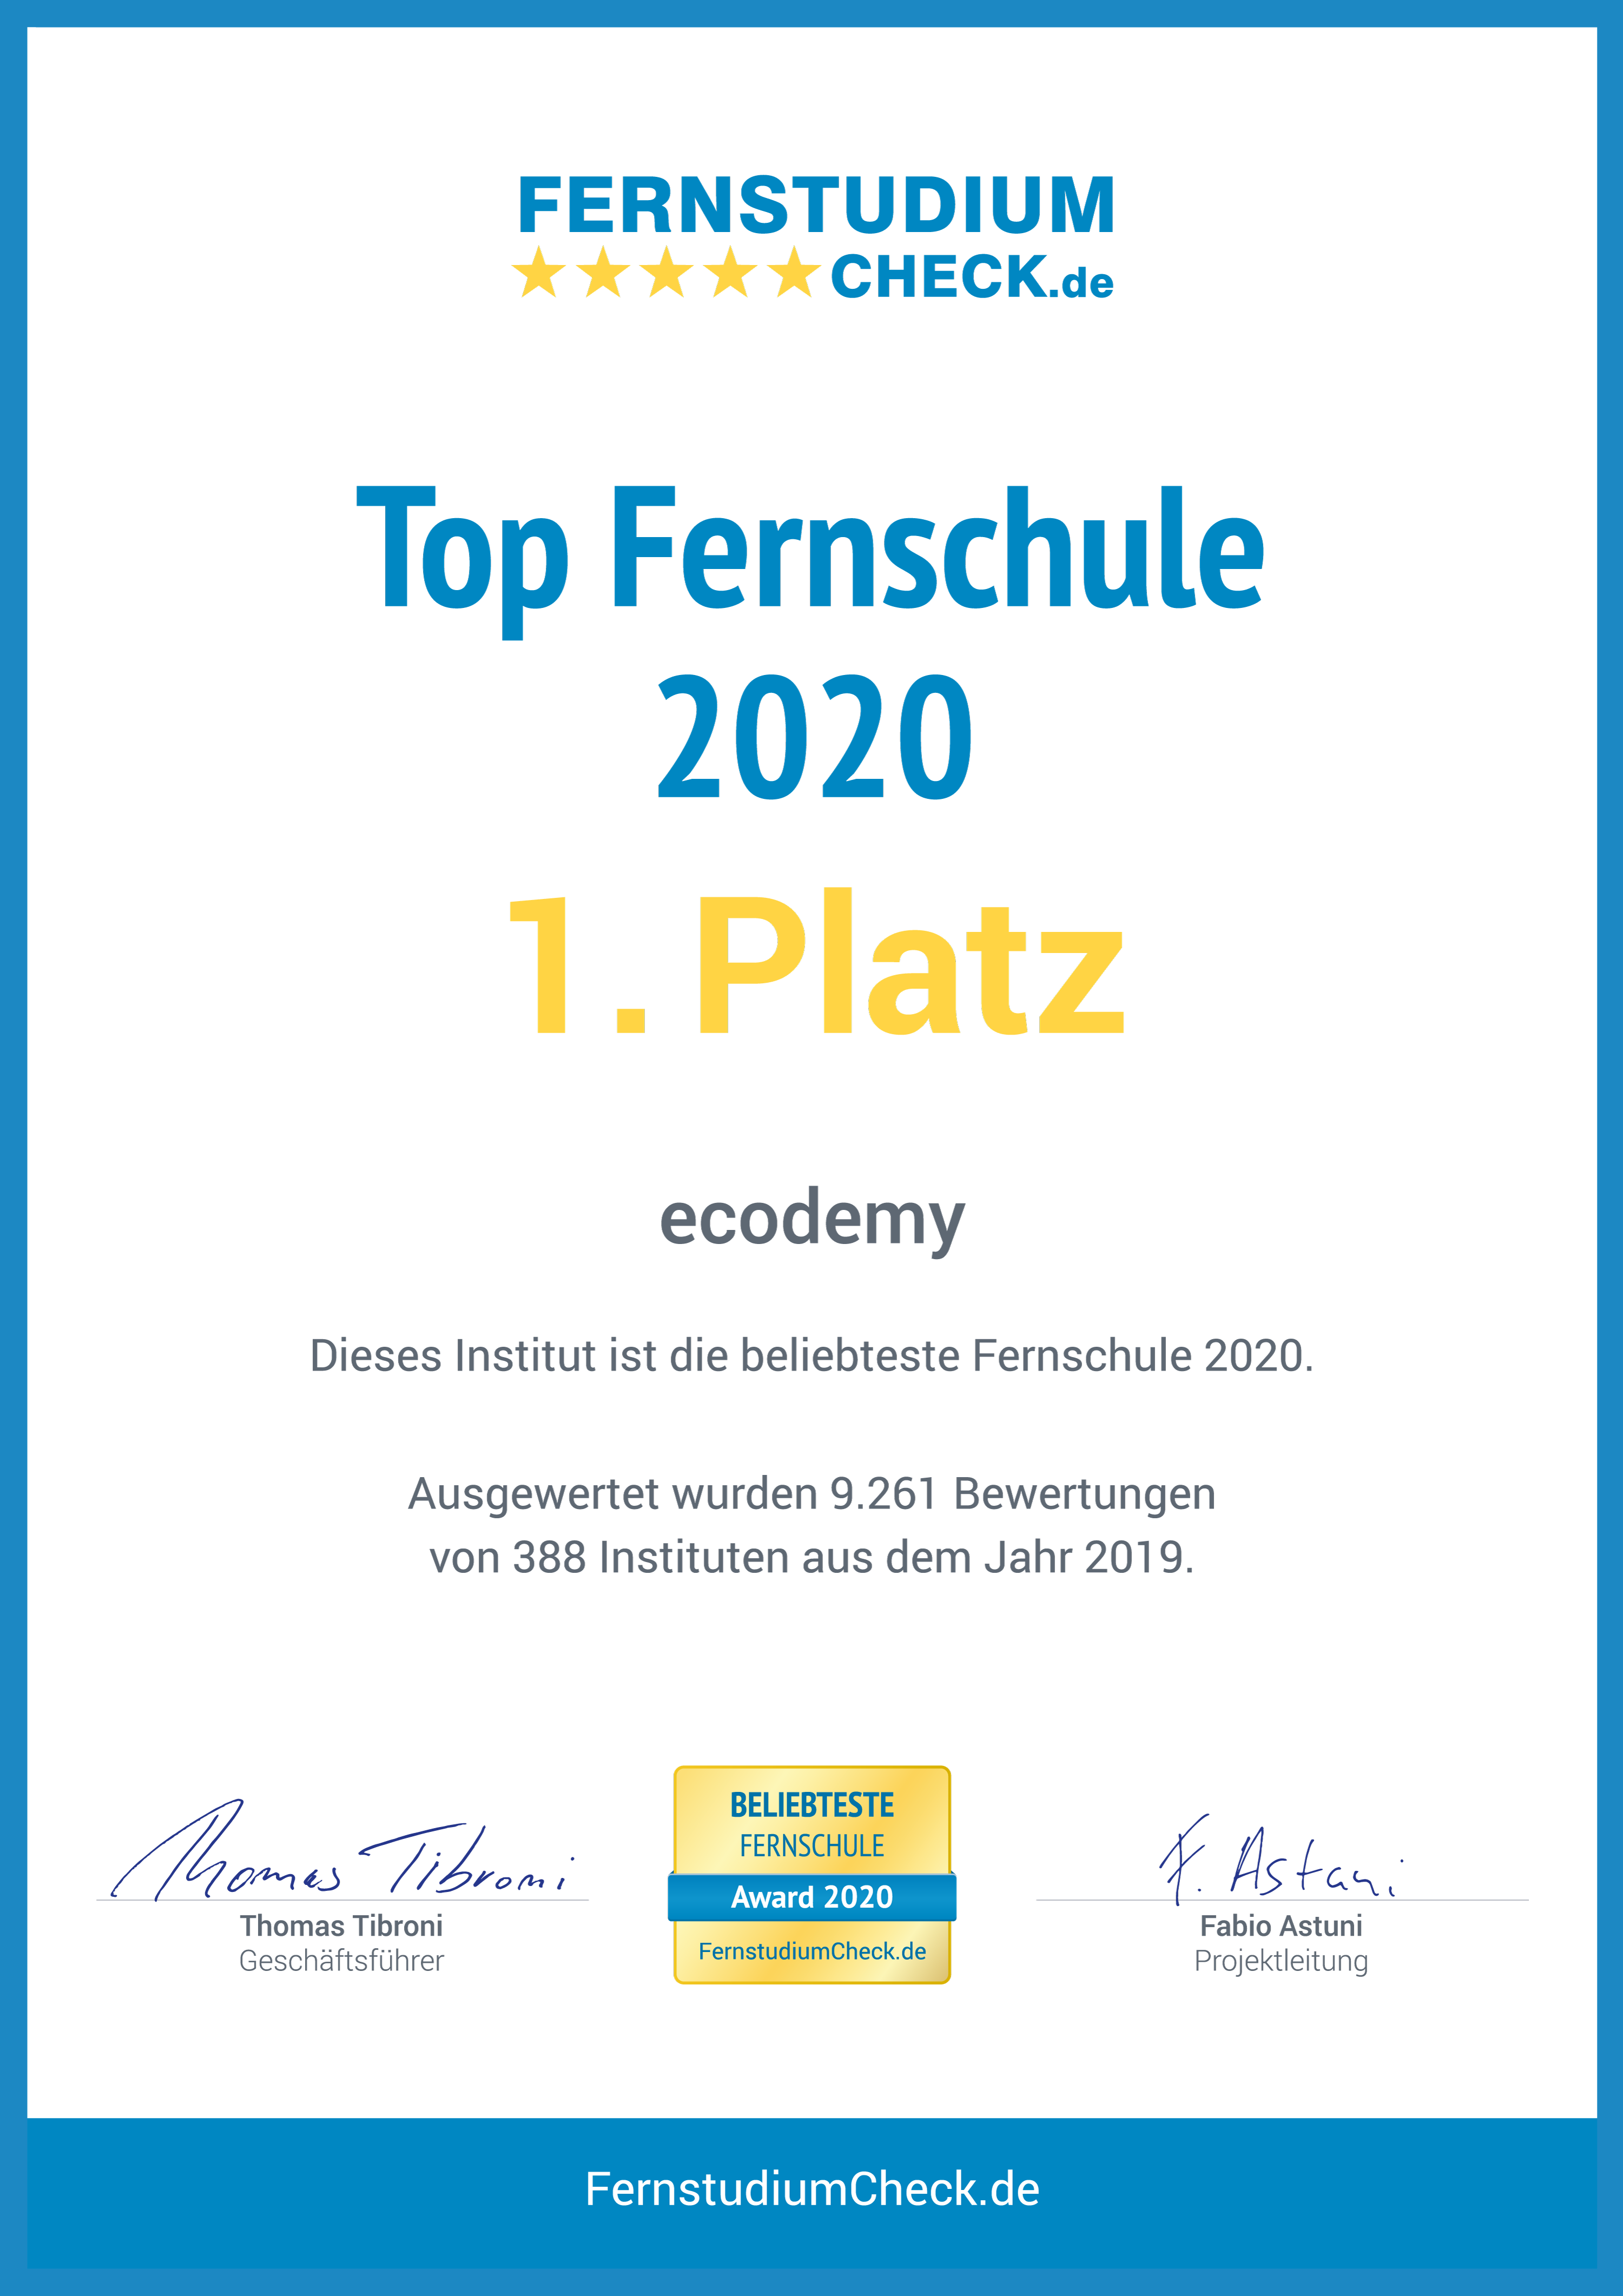 ecodemy beliebteste fernschule 2020 fernstudiumcheck.de